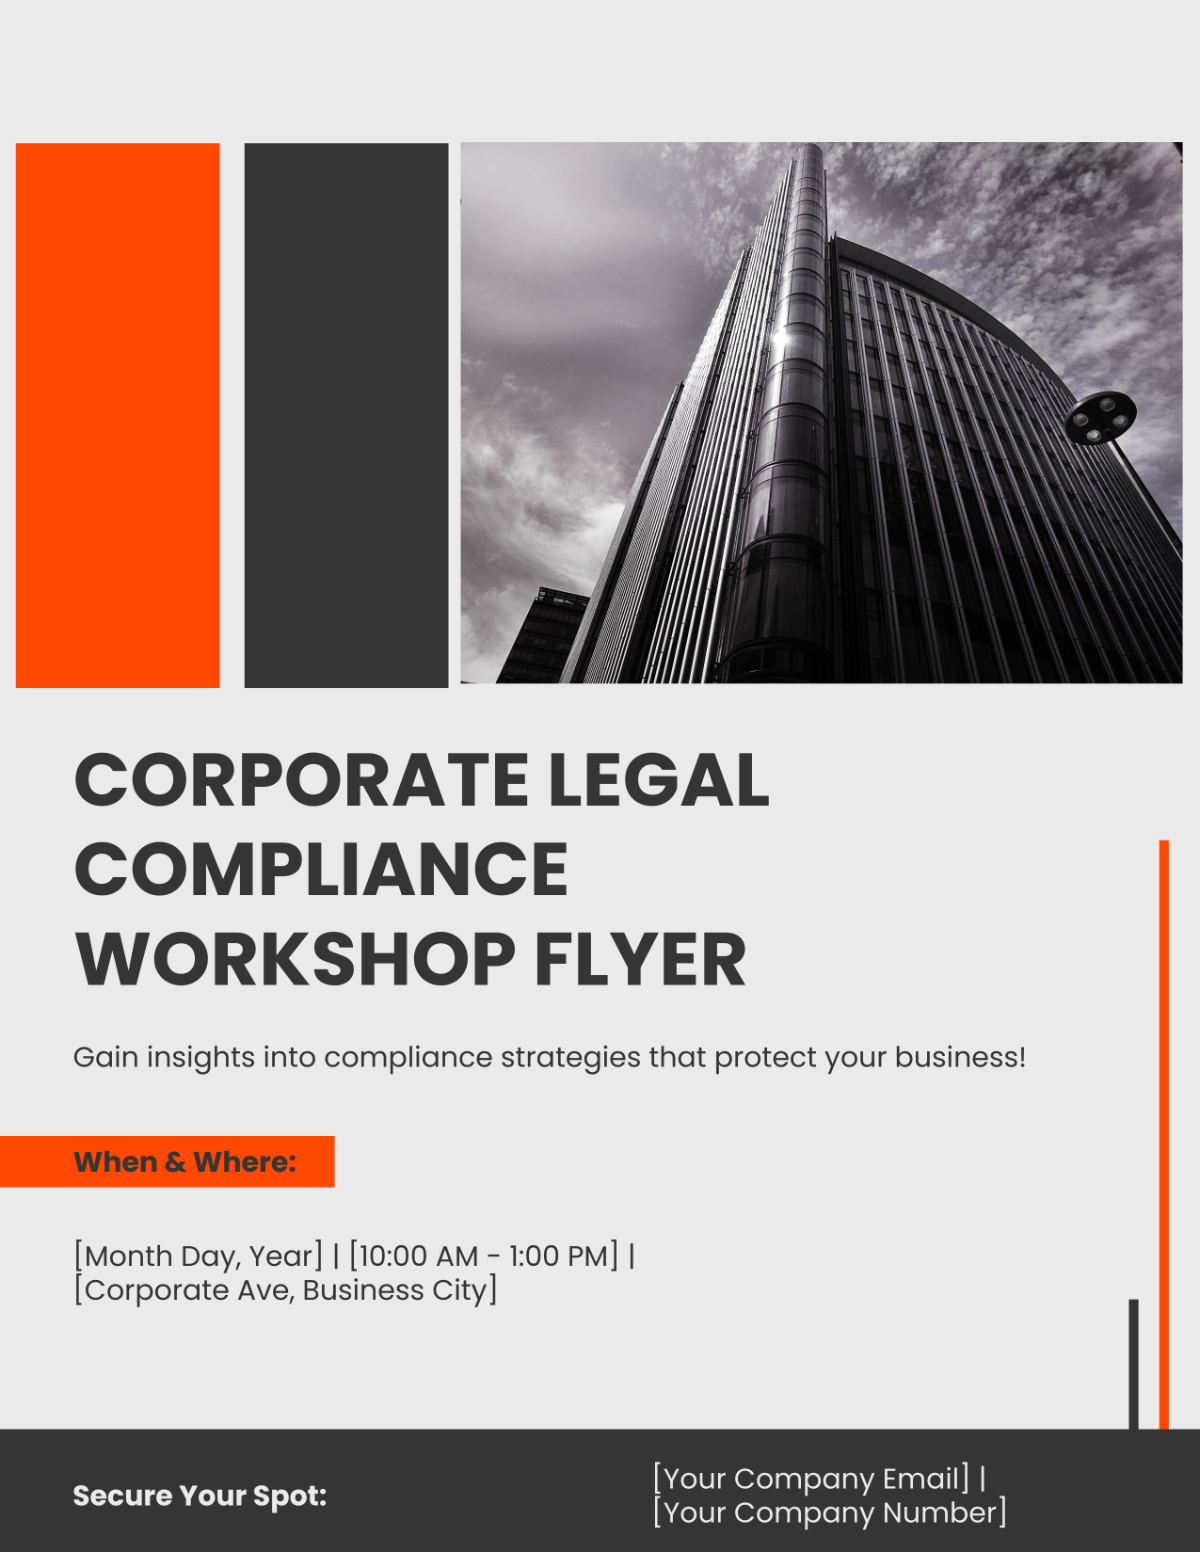 Corporate Legal Compliance Workshop Flyer Template